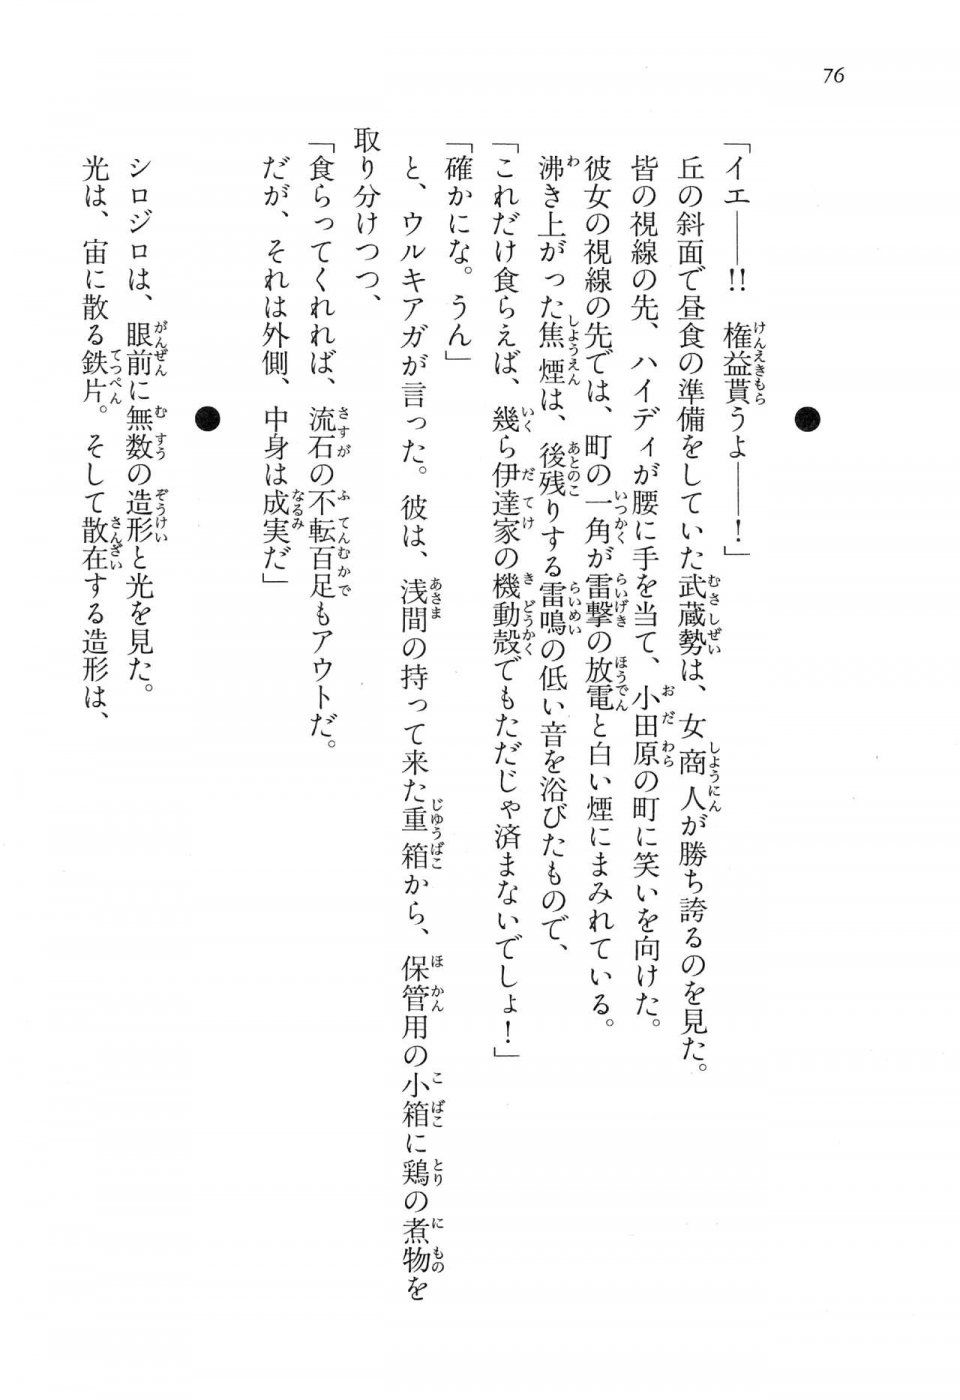 Kyoukai Senjou no Horizon LN Vol 15(6C) Part 1 - Photo #76